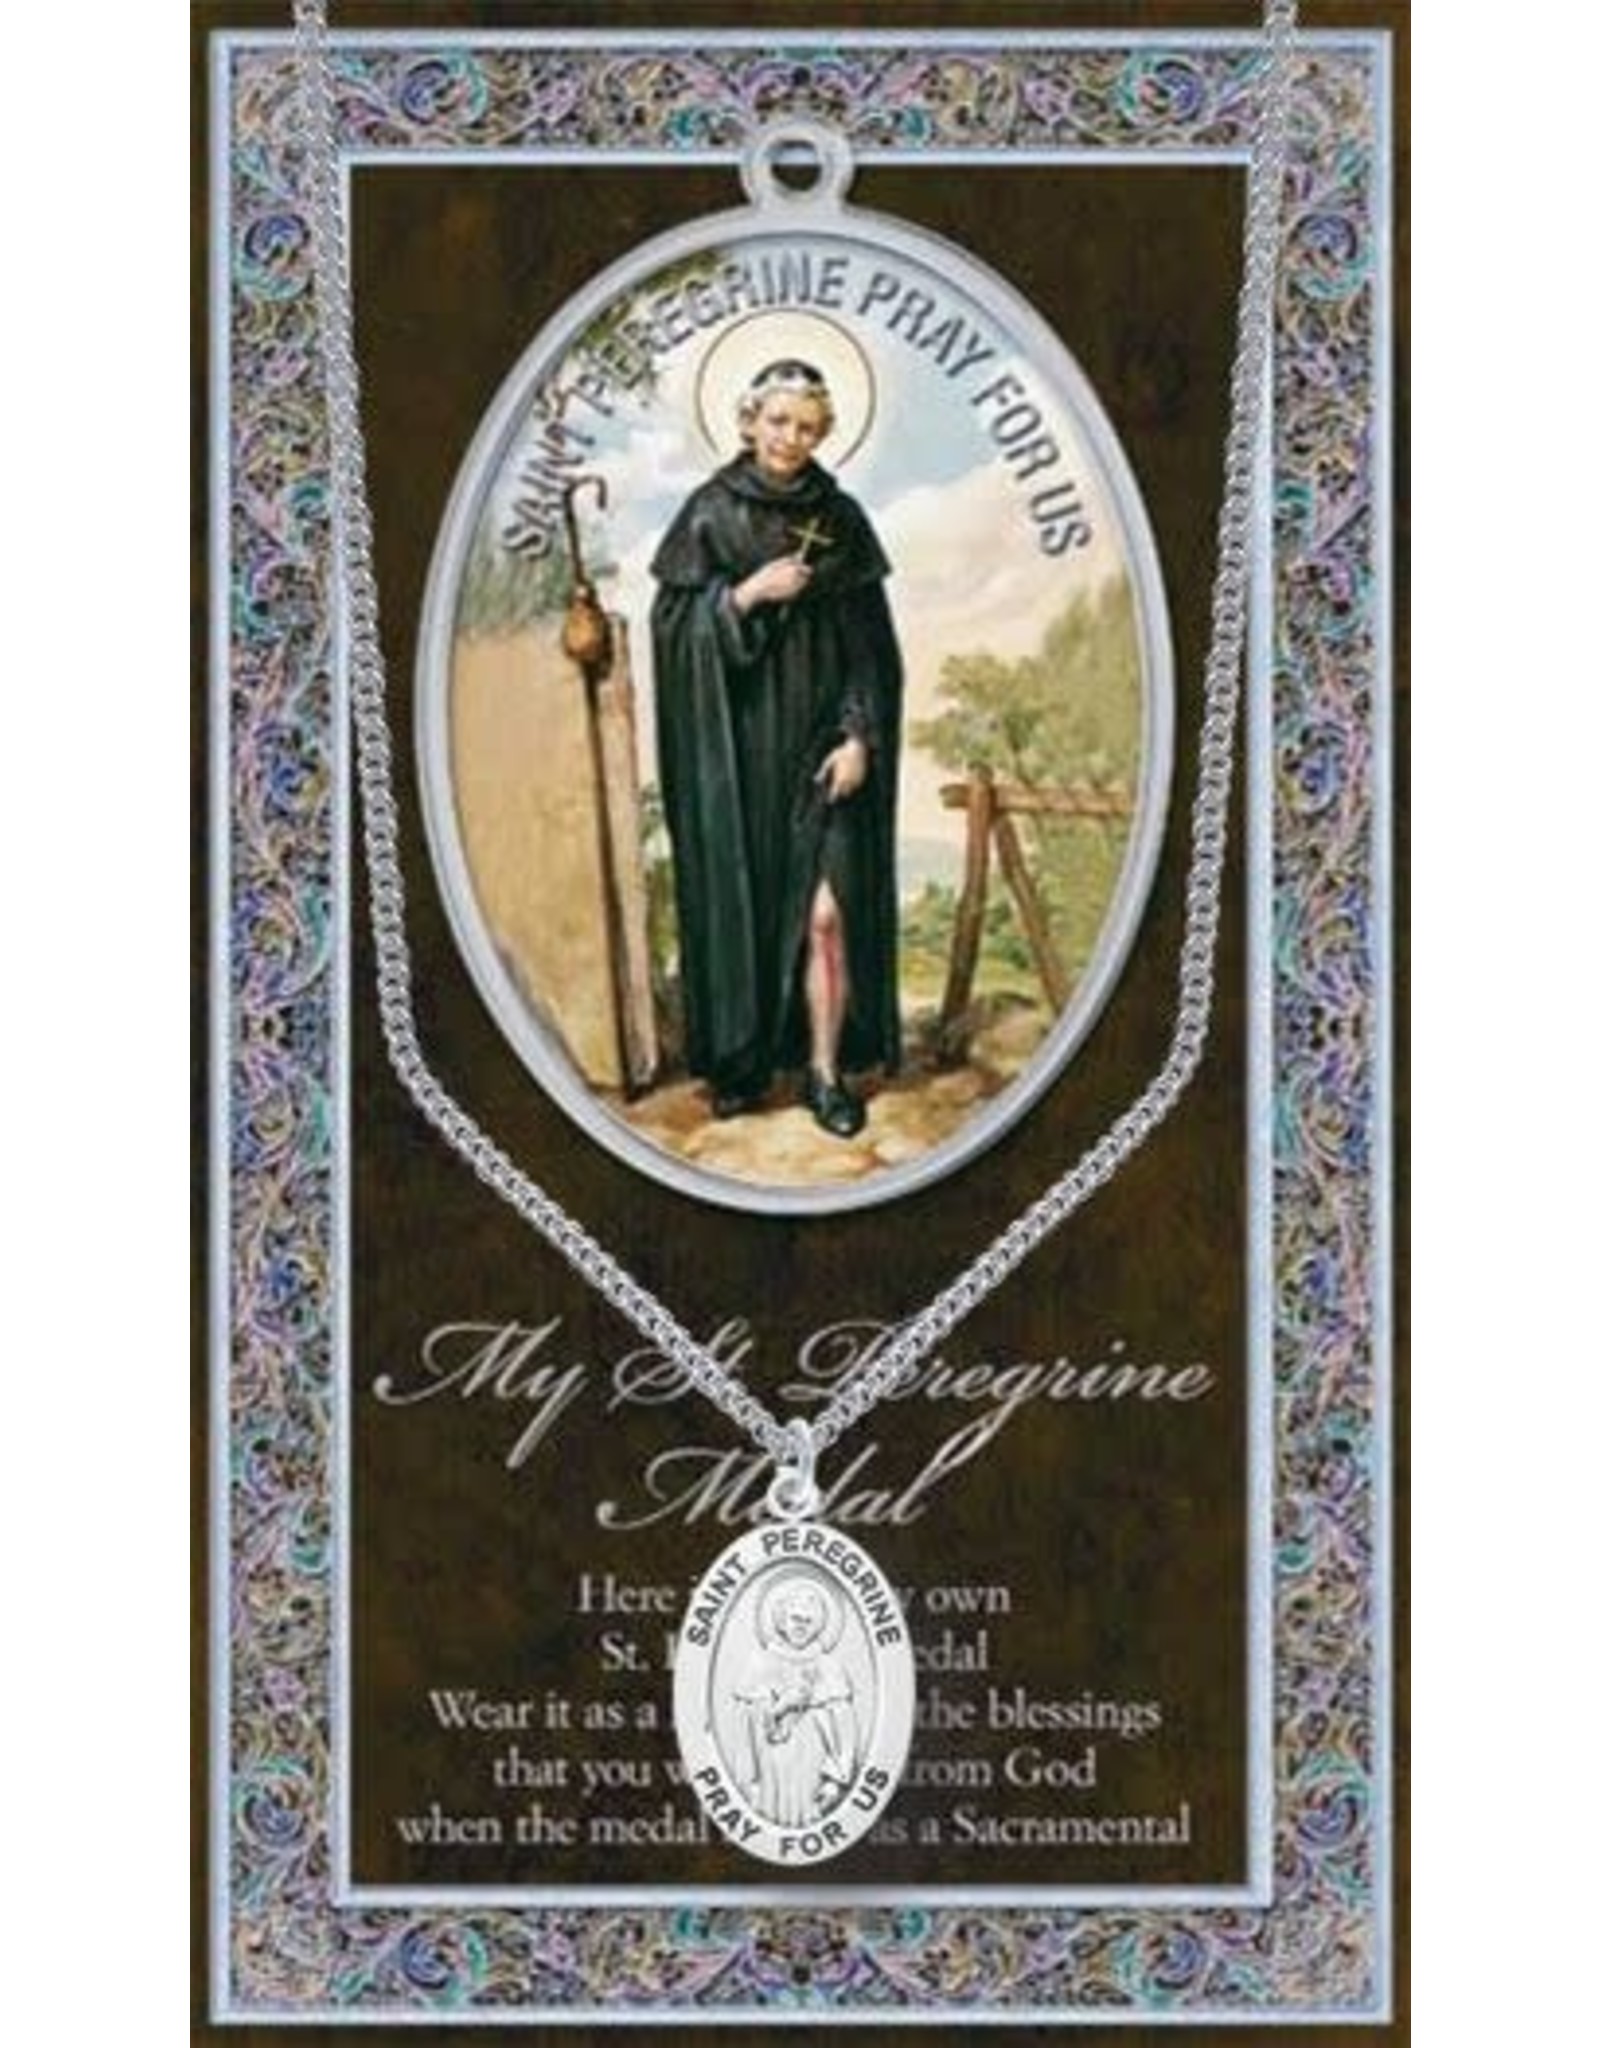 Hirten Saint Medal with Prayer Card - St. Peregrine